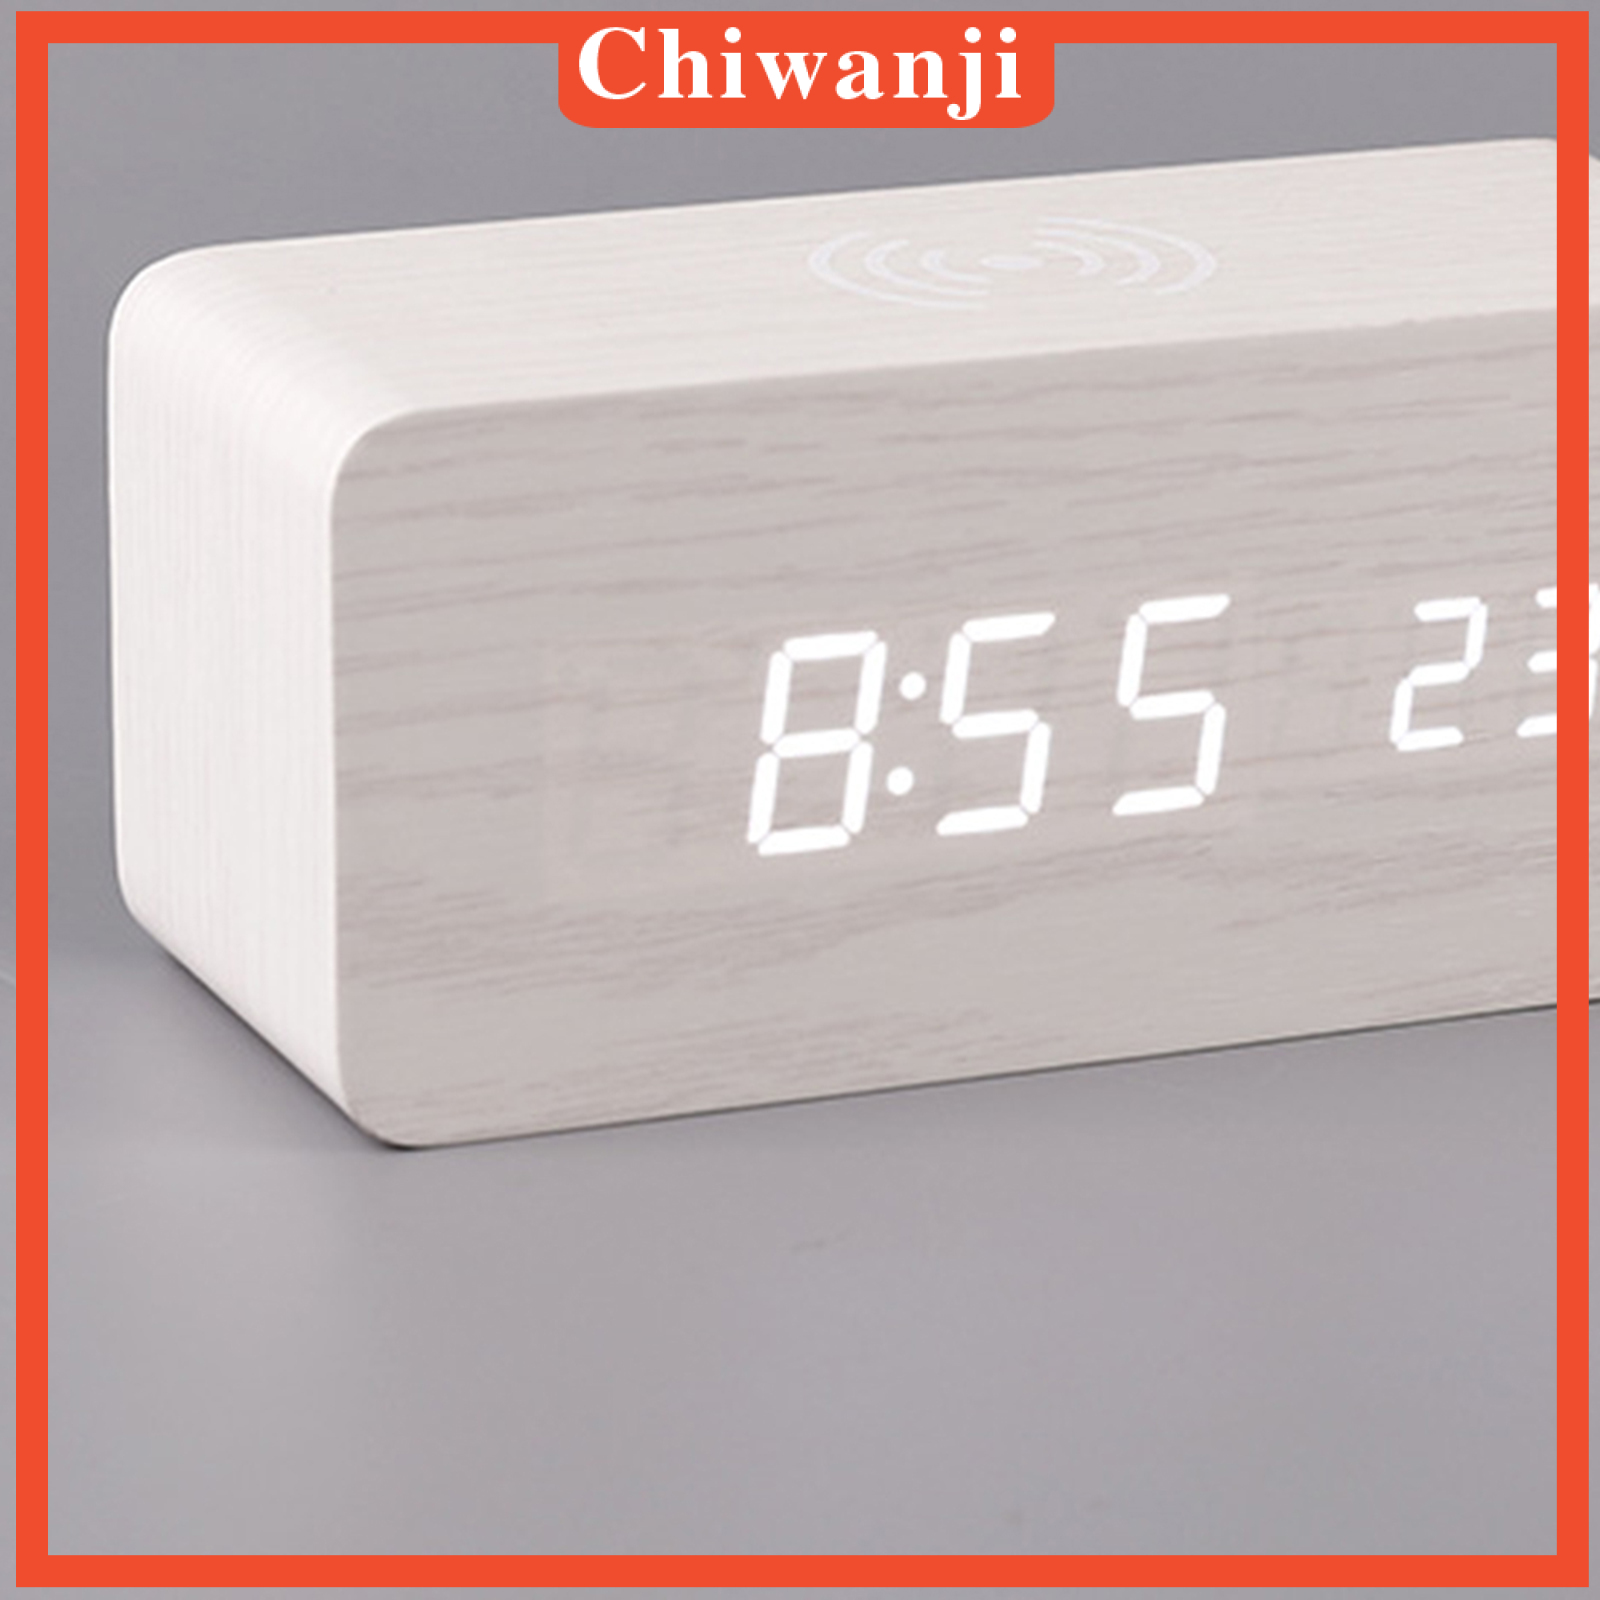 Digital Alarm Clock &amp; Wooden Electronic LED Time Display Temperature Detect